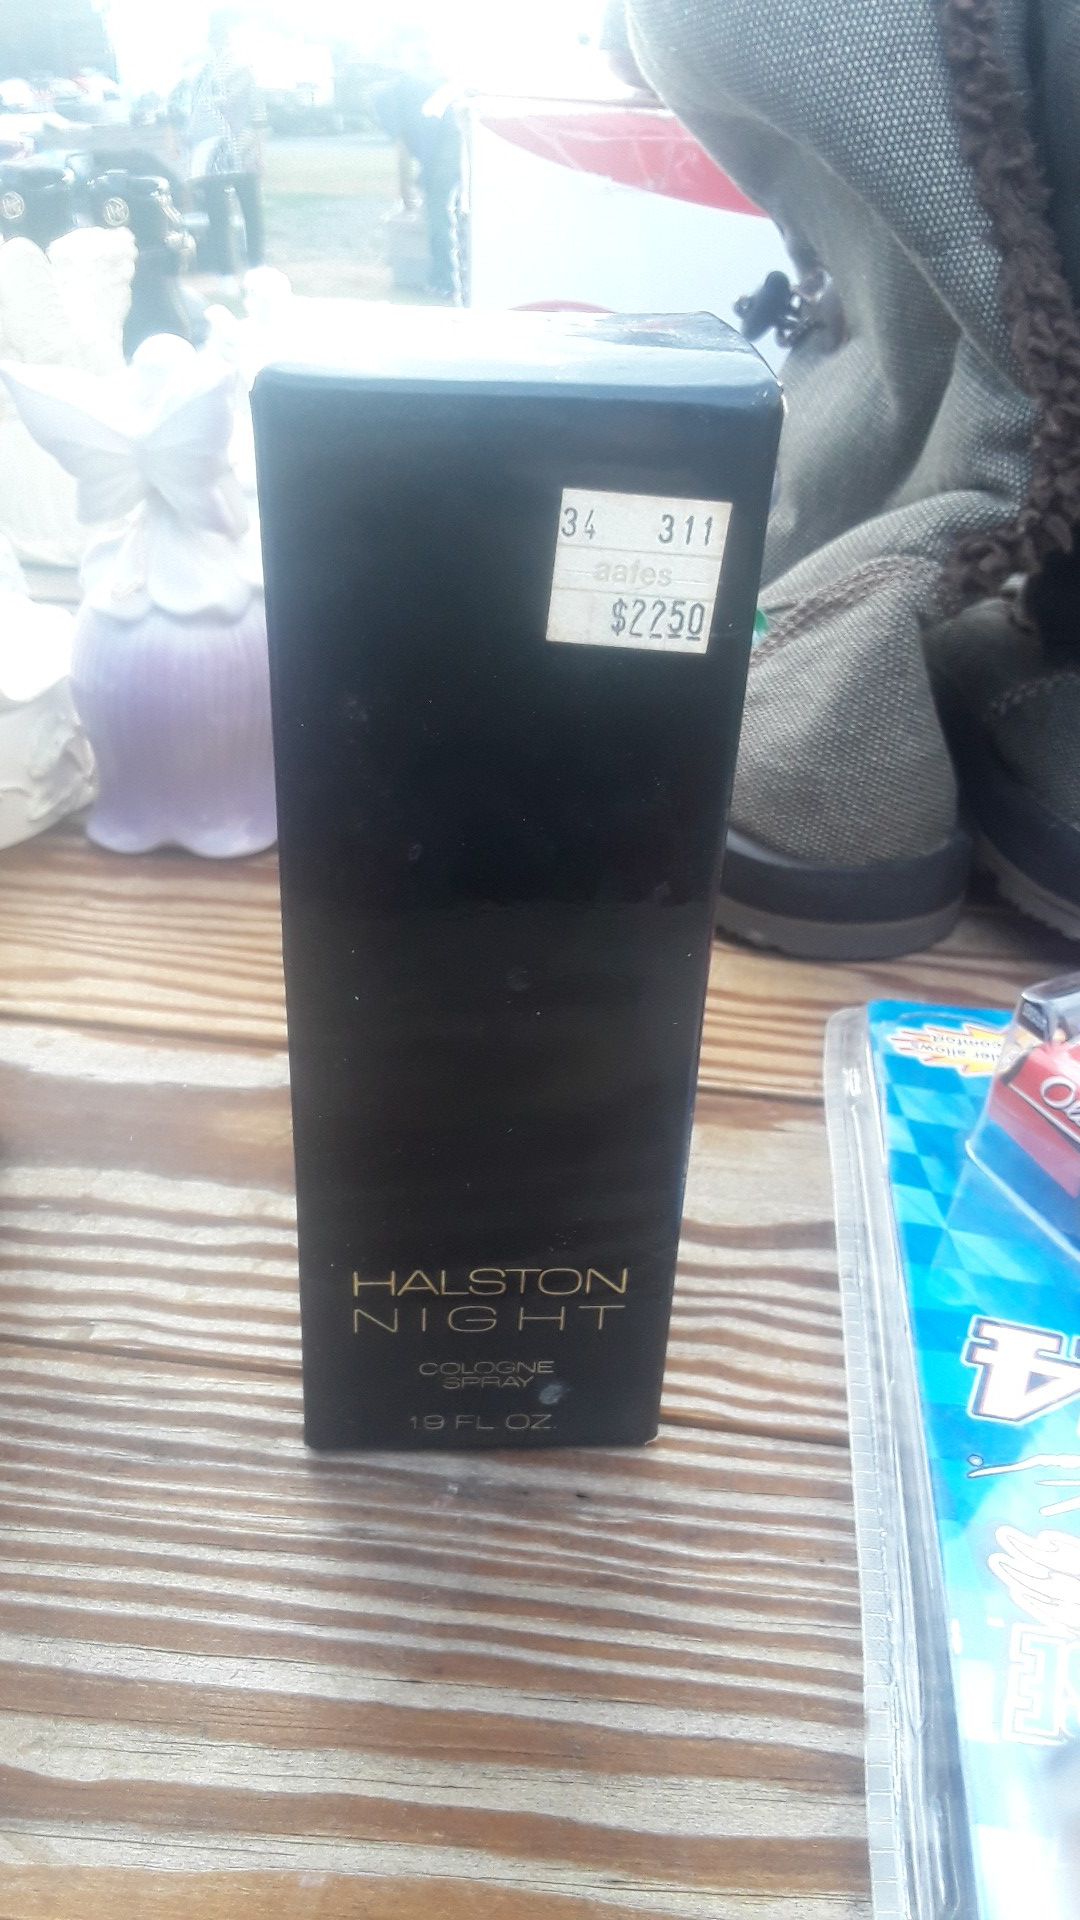 Halston night perfume